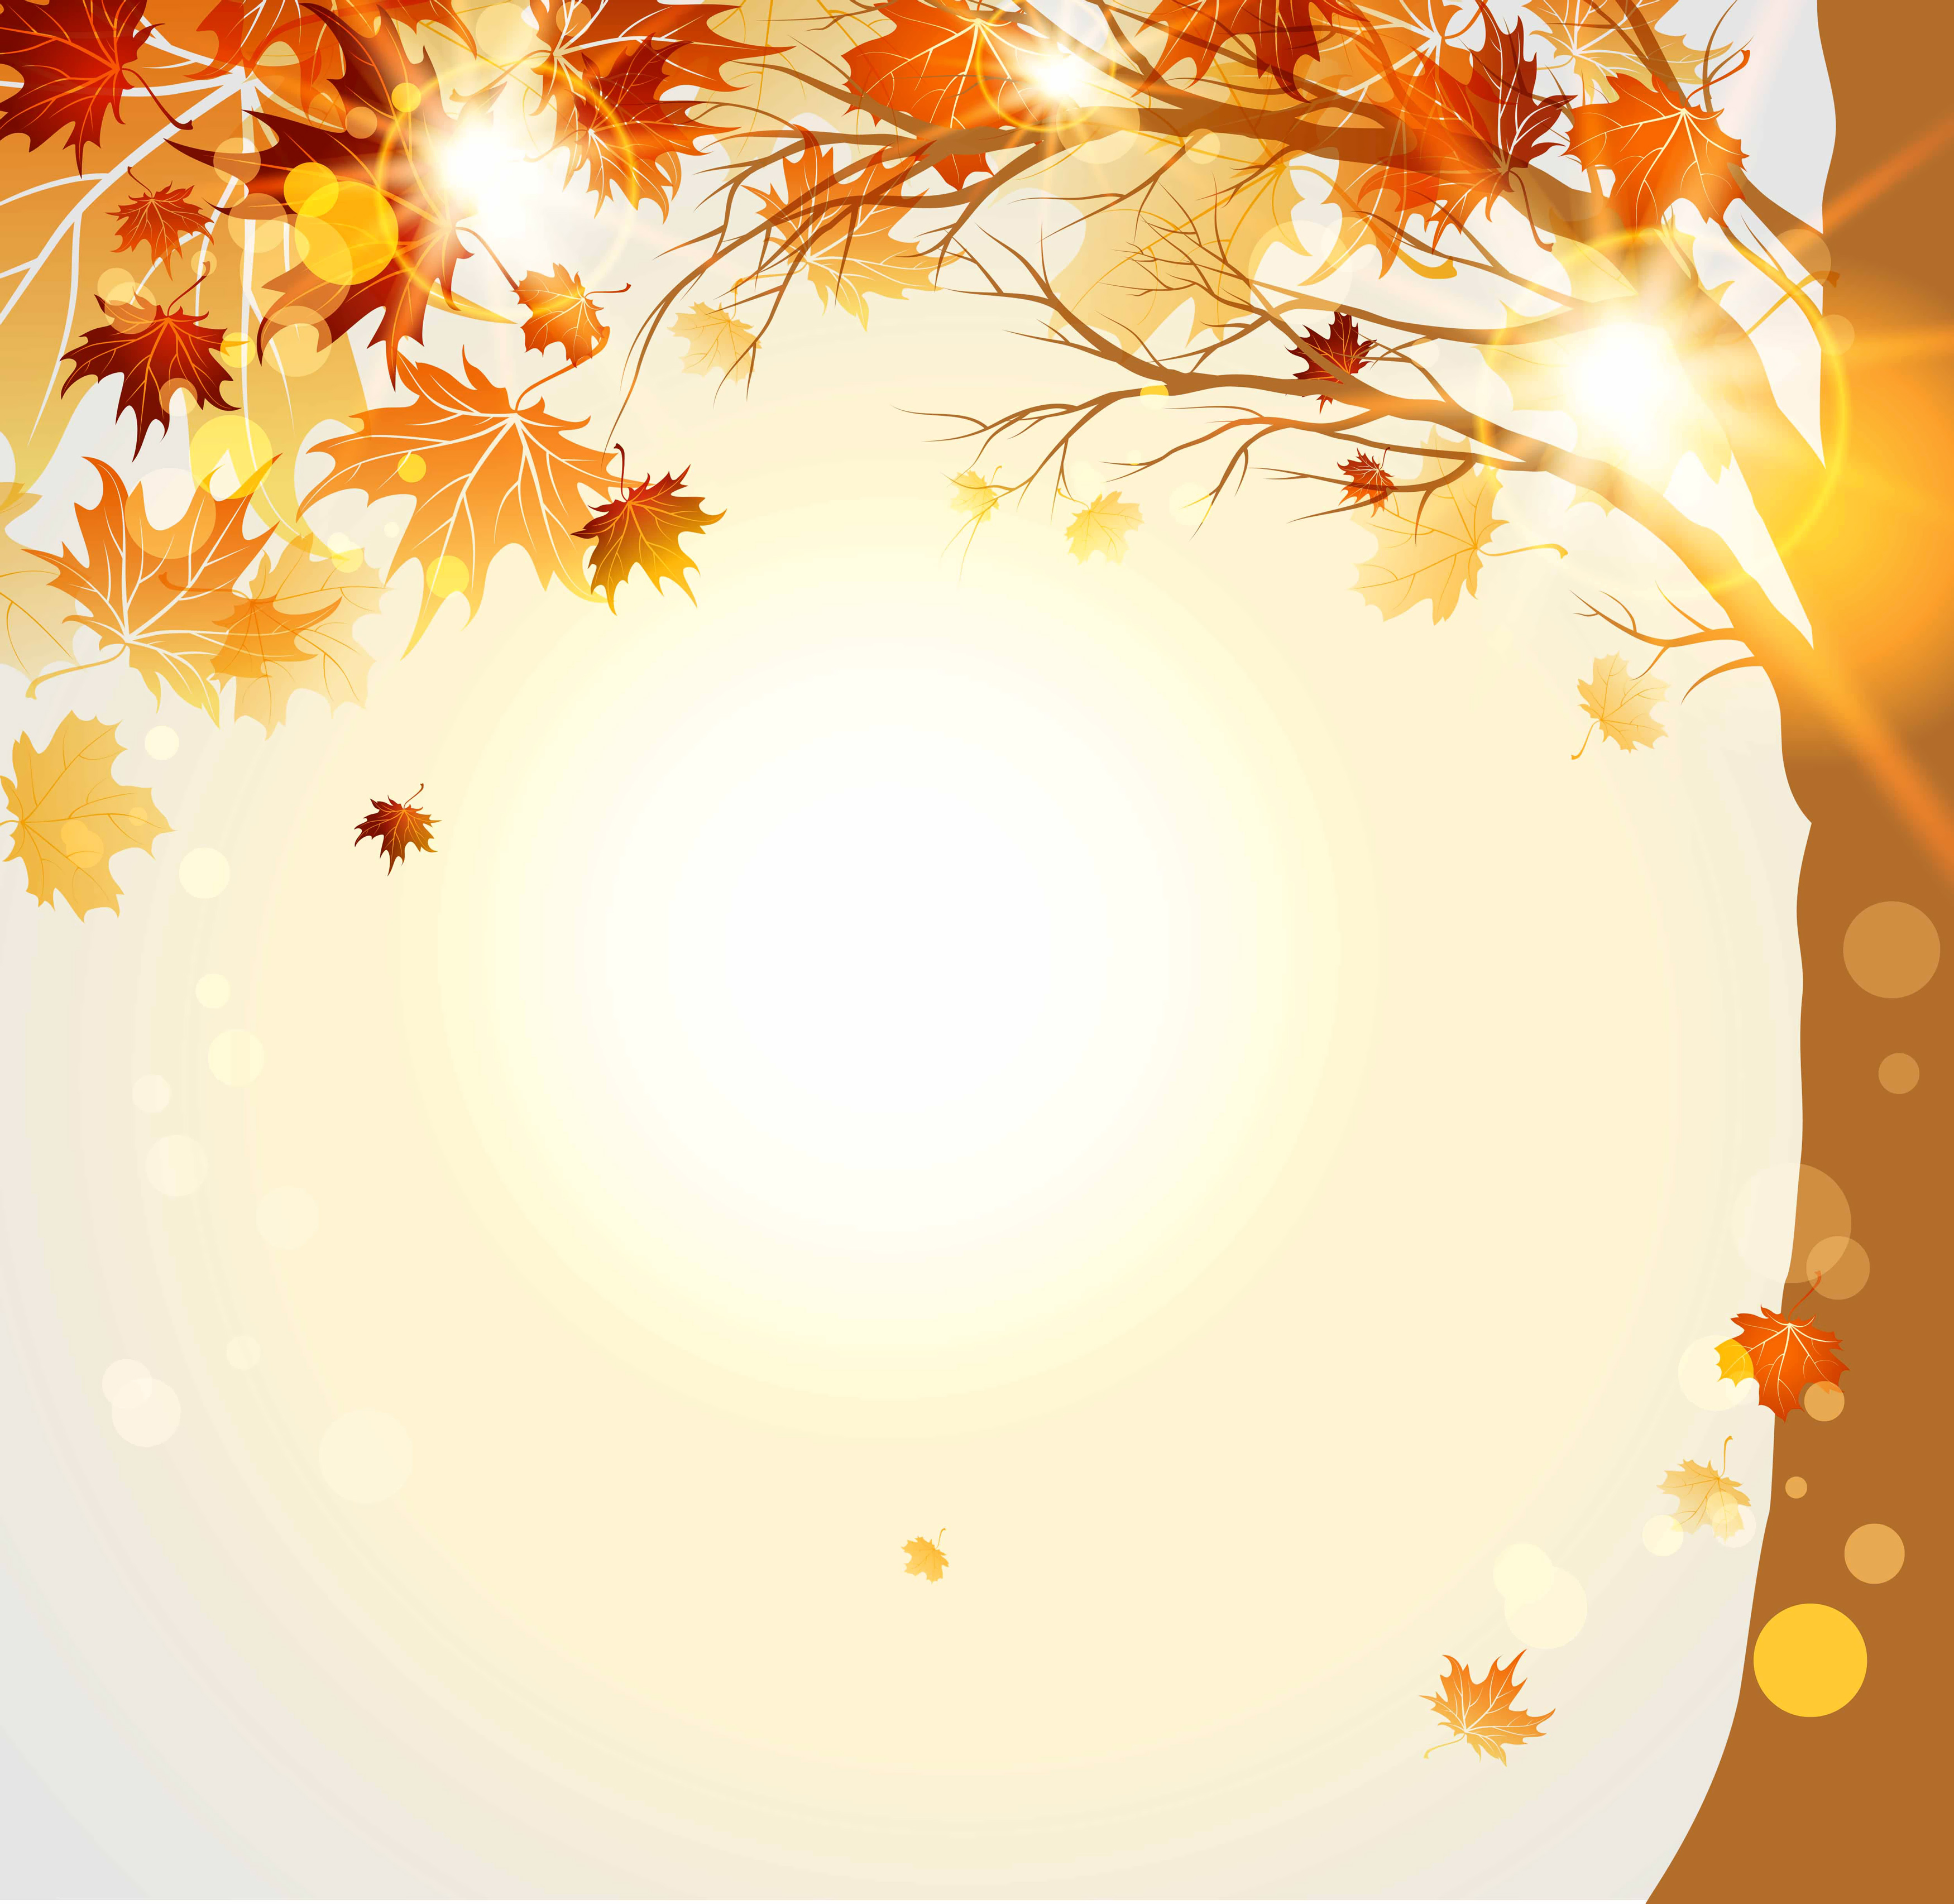 Fall background image